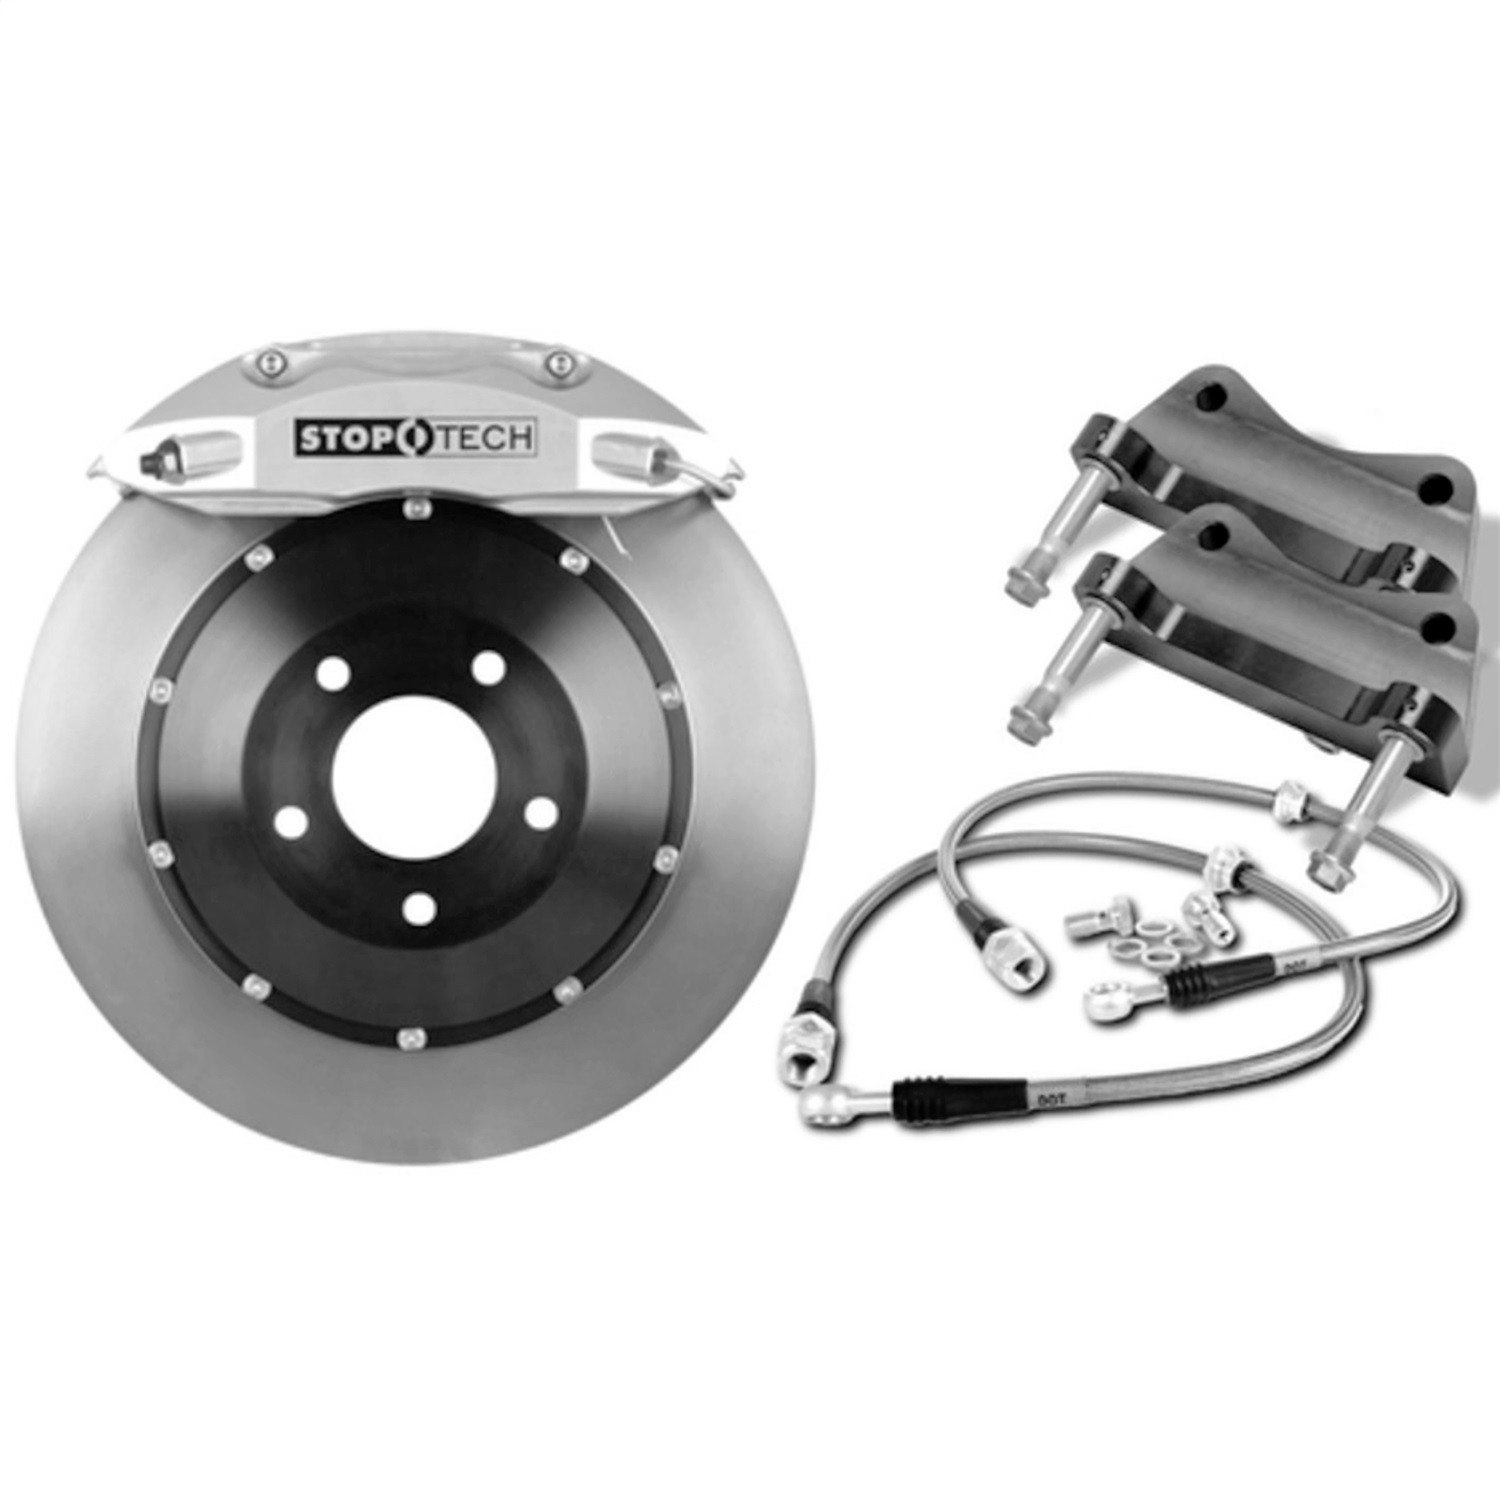 StopTech 83.165.6700.R3 Big Brake Kit w/2 Piece Rotors Fits 08-13 135i